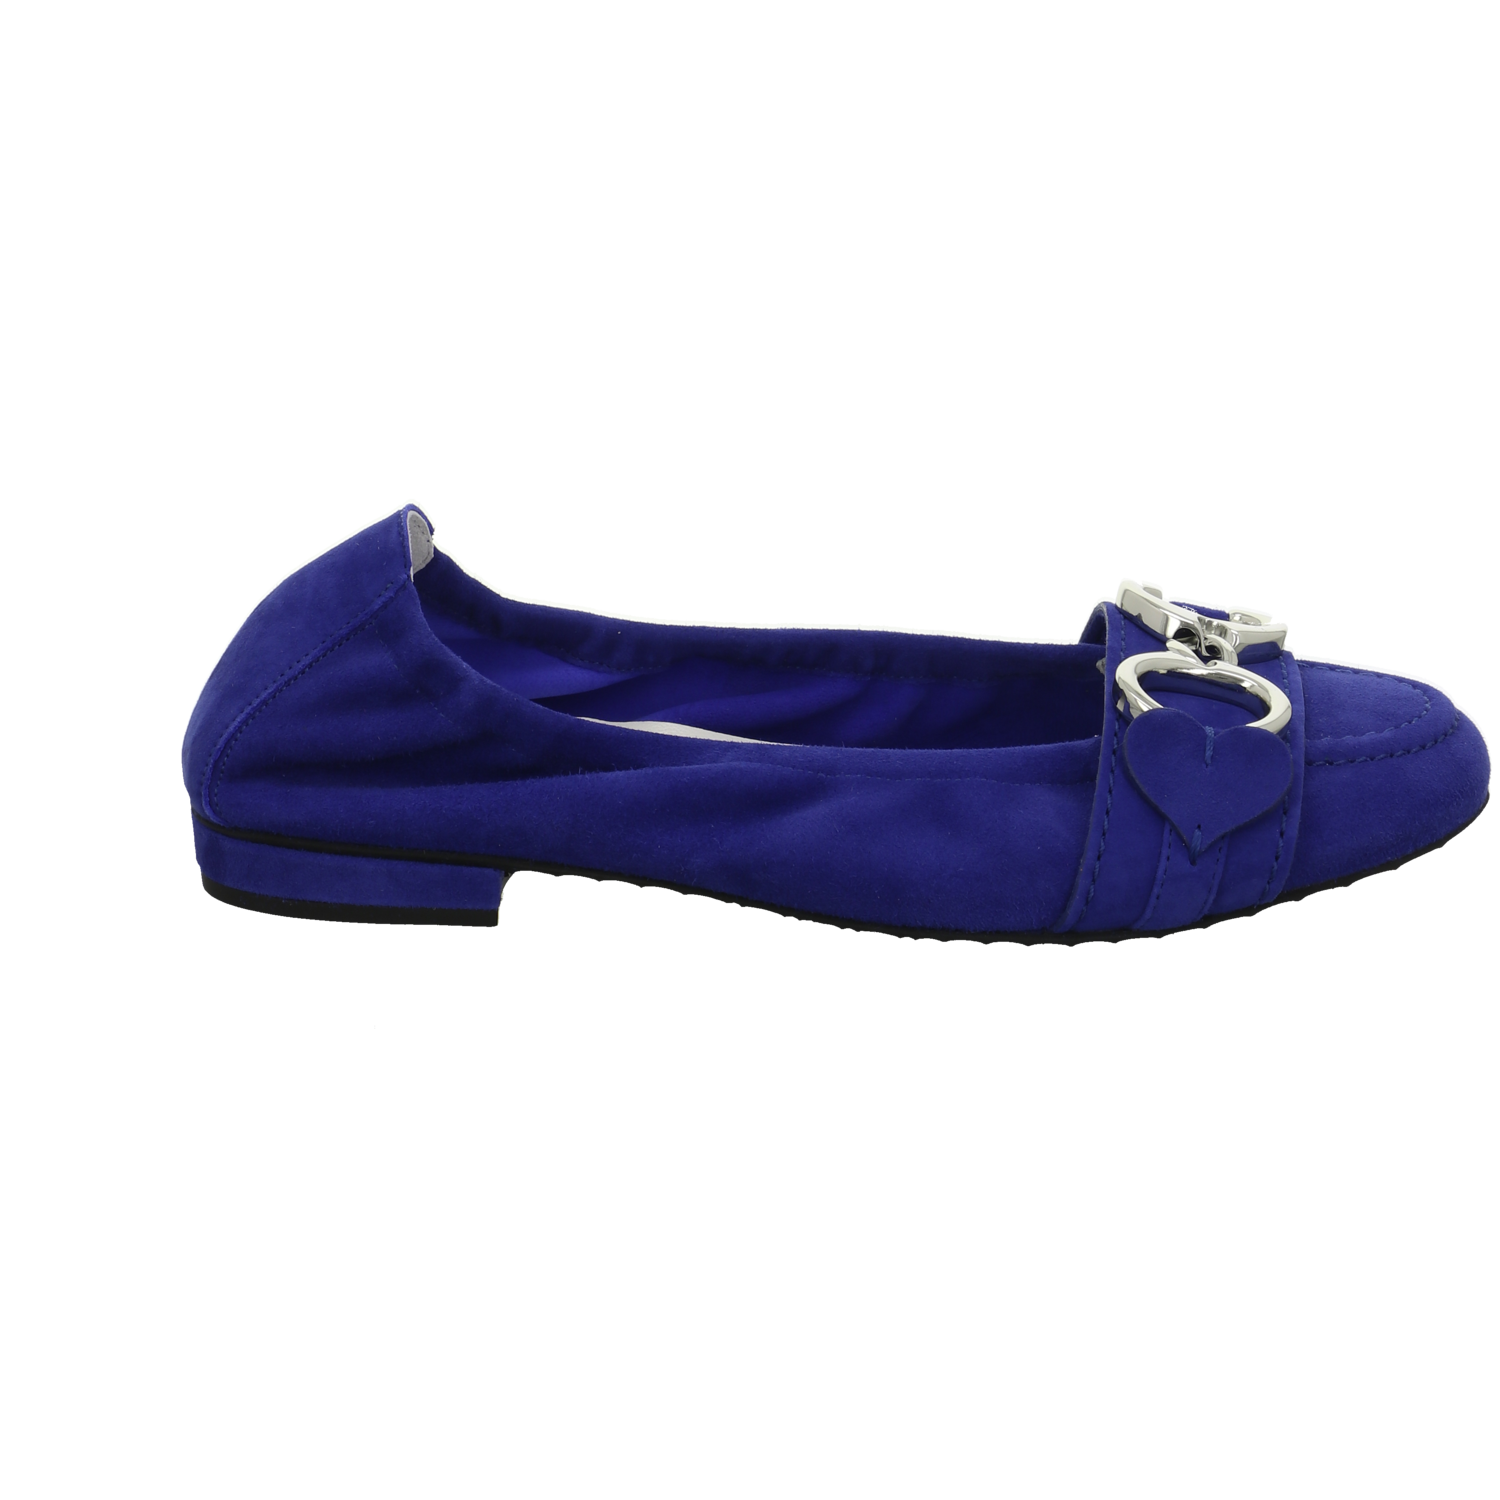 K + S shoes Pumps bis 25 mm royal / mittel-blau